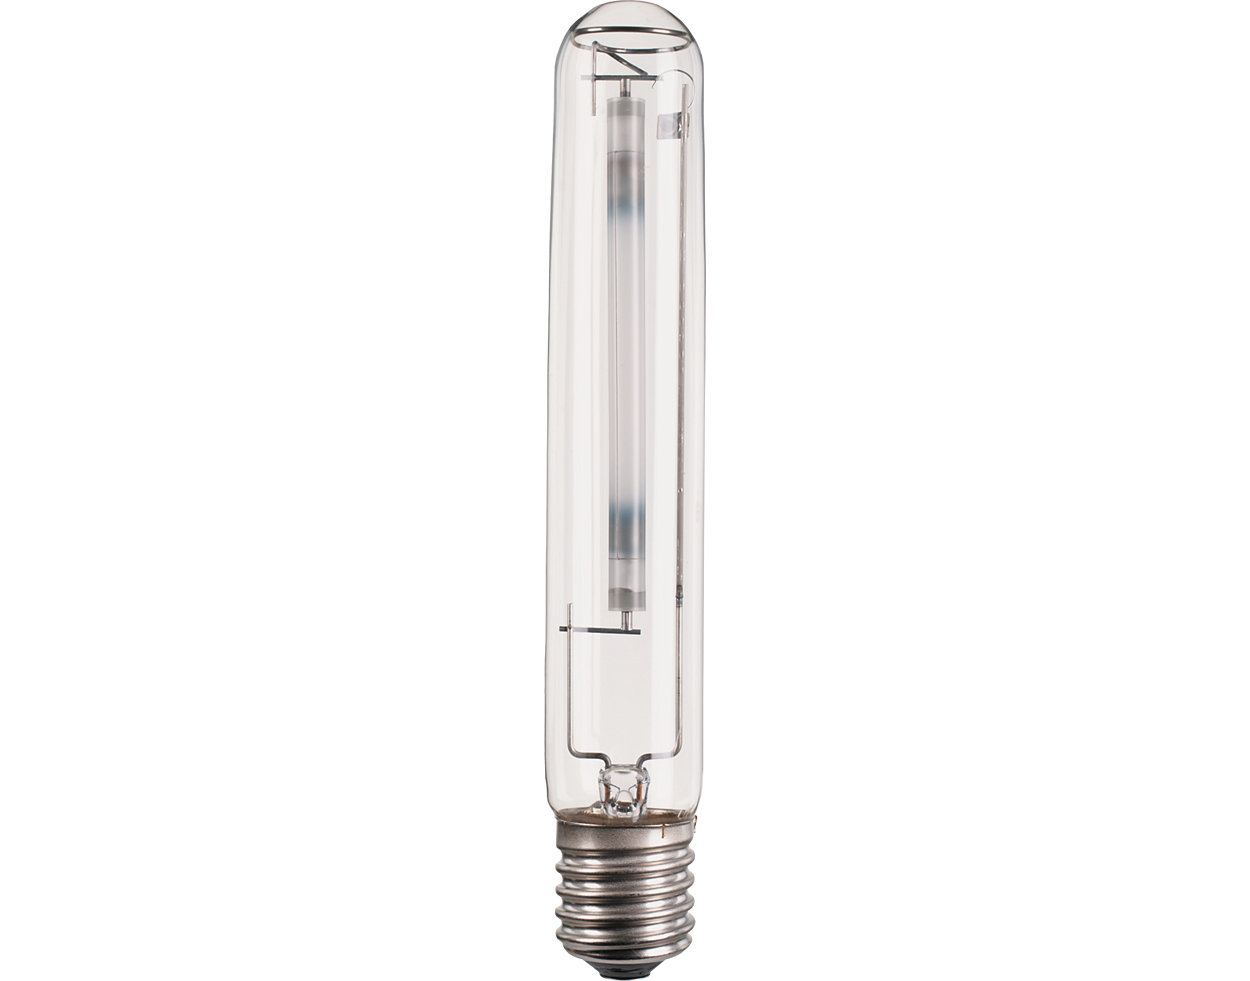 Philips 20063115 High pressure sodium vapor lamp MASTER SON-T PIA Hg-Free 400W/2150K E40 